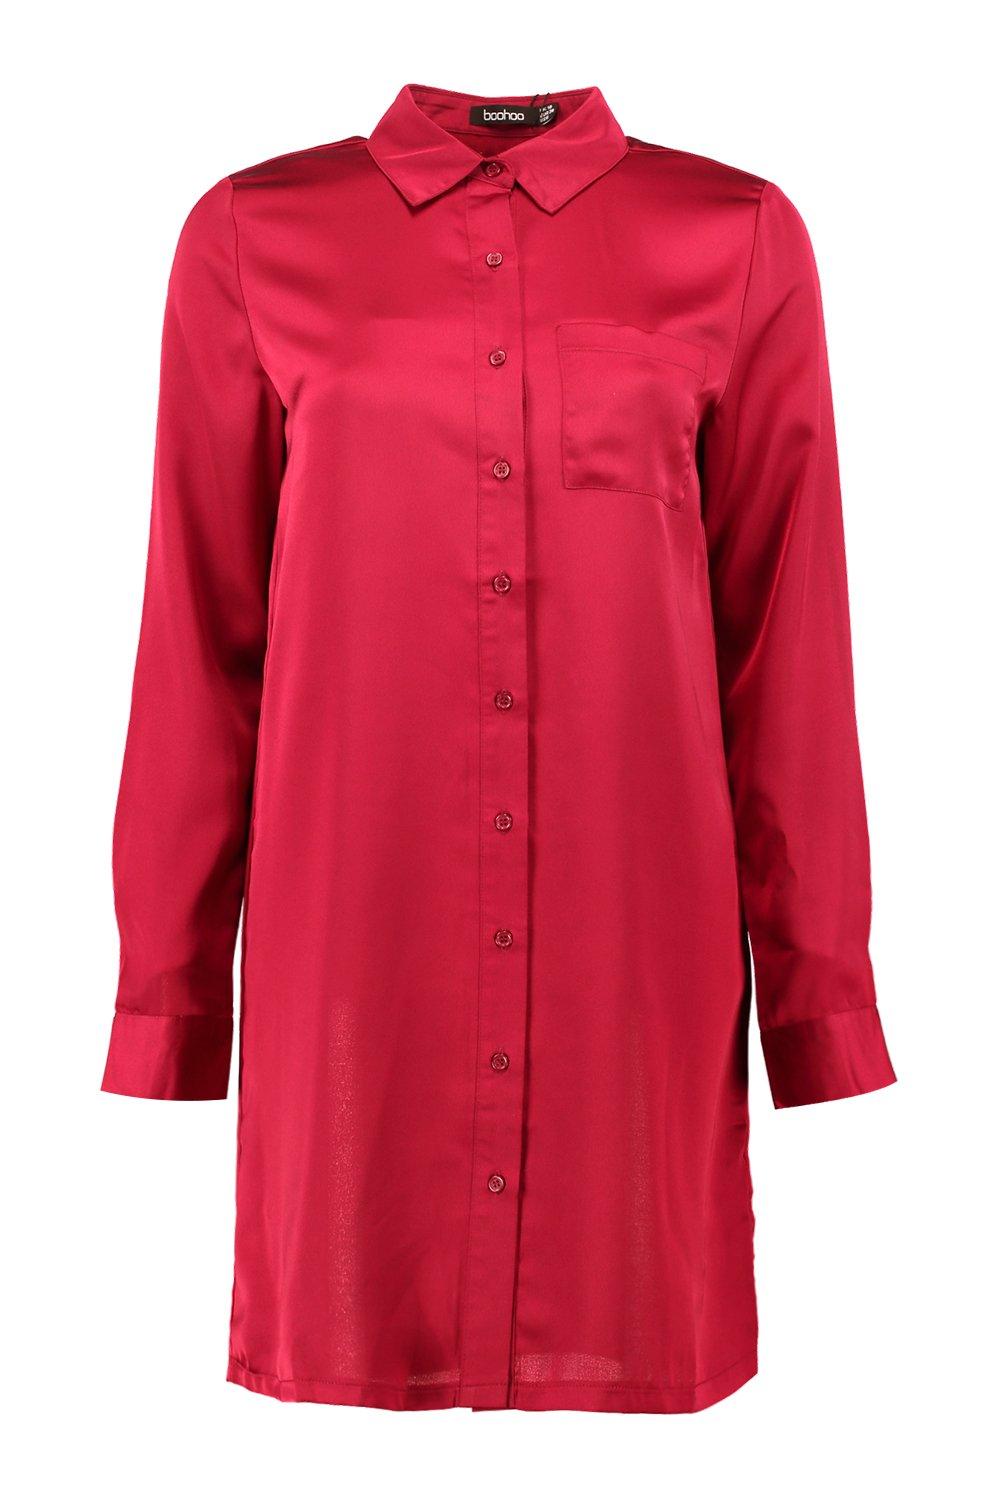 Boohoo Harriet Satin Shirt Dress - Satiny